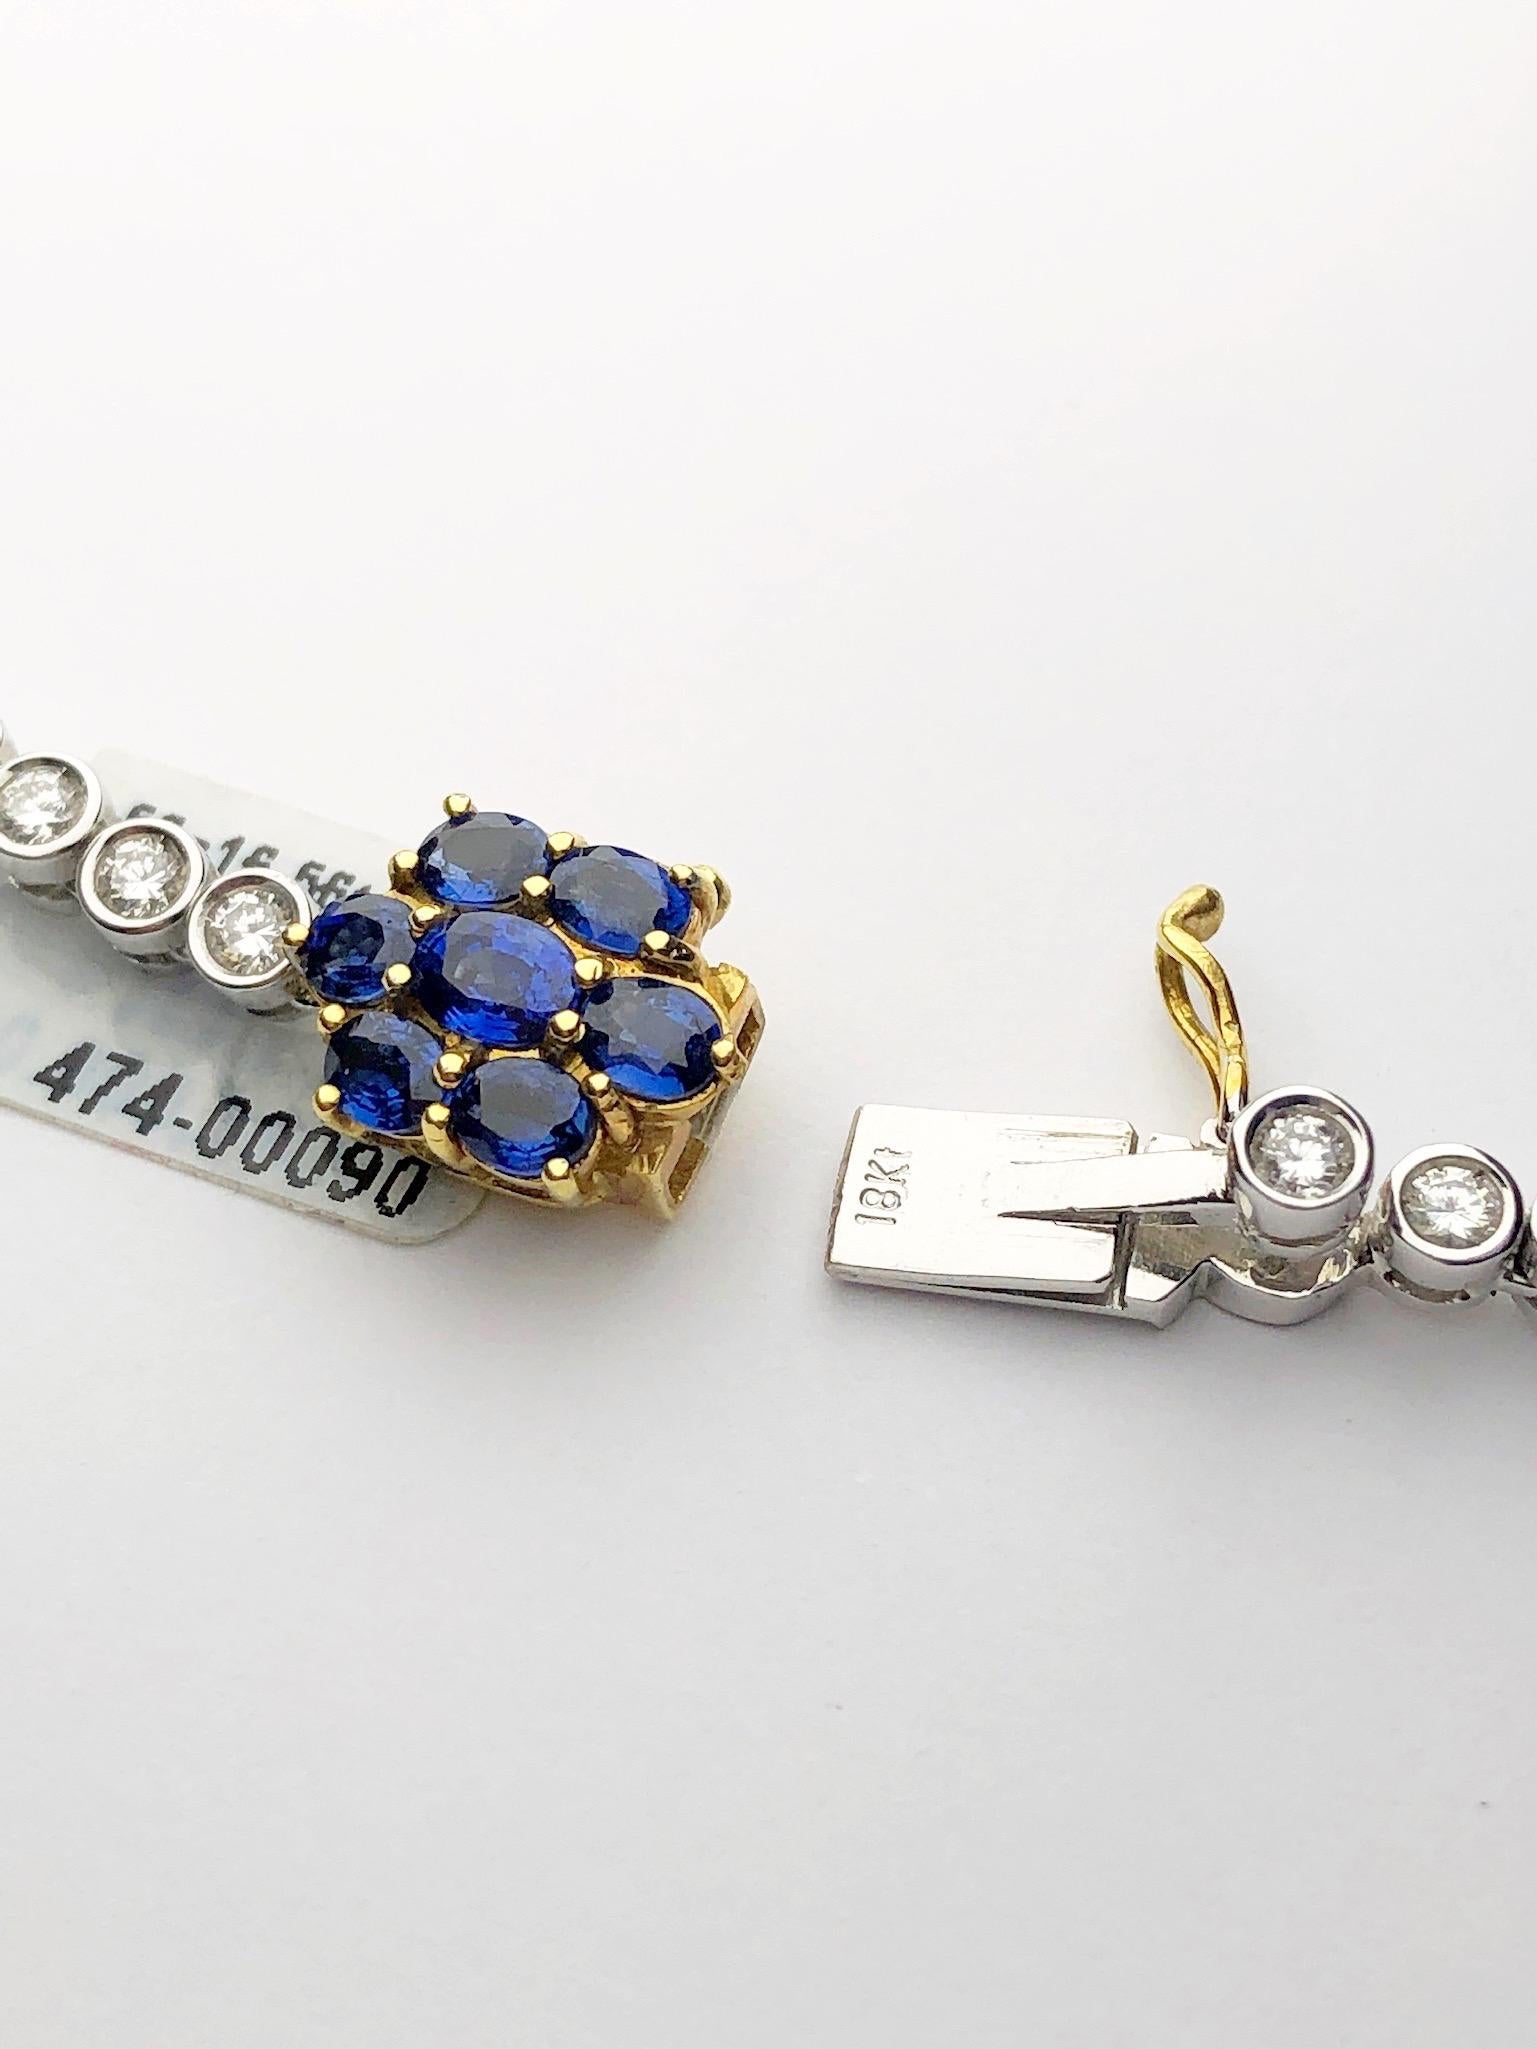 Oval Cut 18 Karat White Gold, 8.78 Carat Diamond & 16.56 Carat Blue Sapphire Bib Necklace For Sale